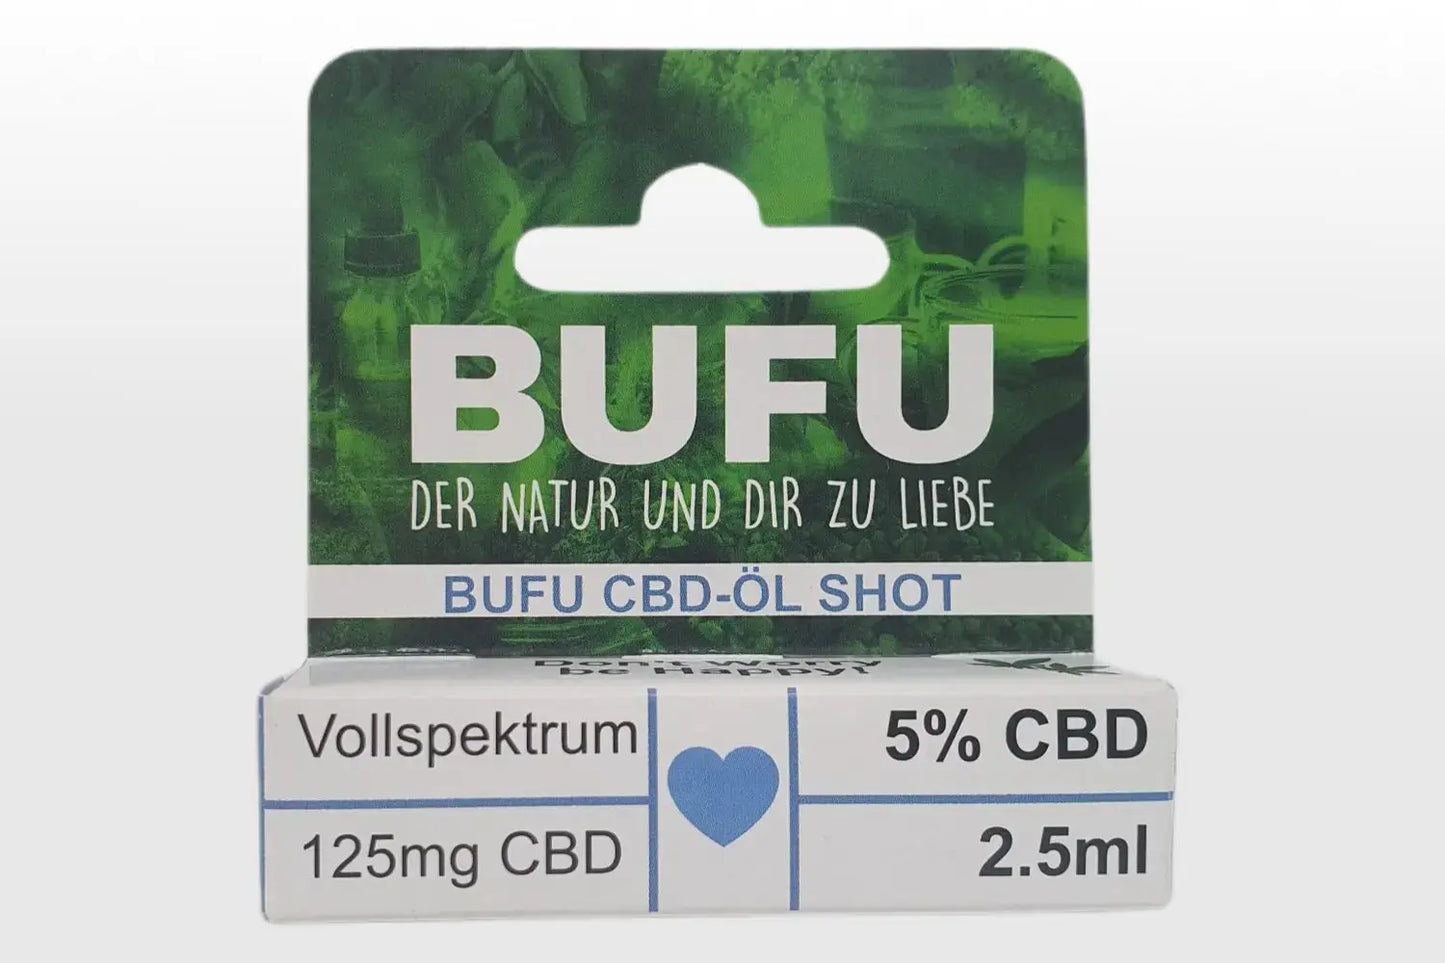 BUFU Hanf & CBD Shop - CBD-Öl - CBD-Öl-Shot - Verpackungsfoto vorne